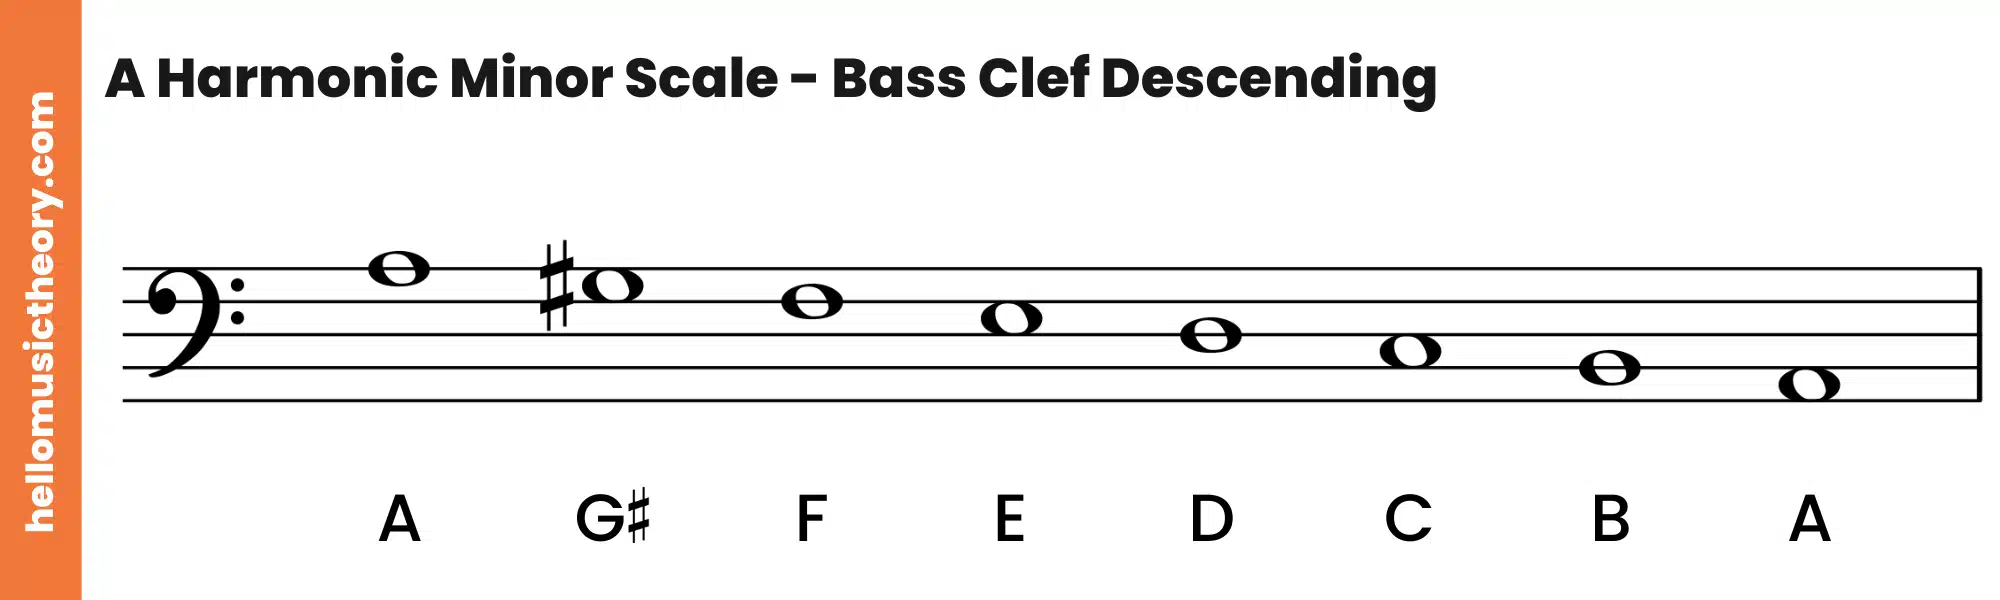 A Harmonic Minor Scale Bass Clef Descending